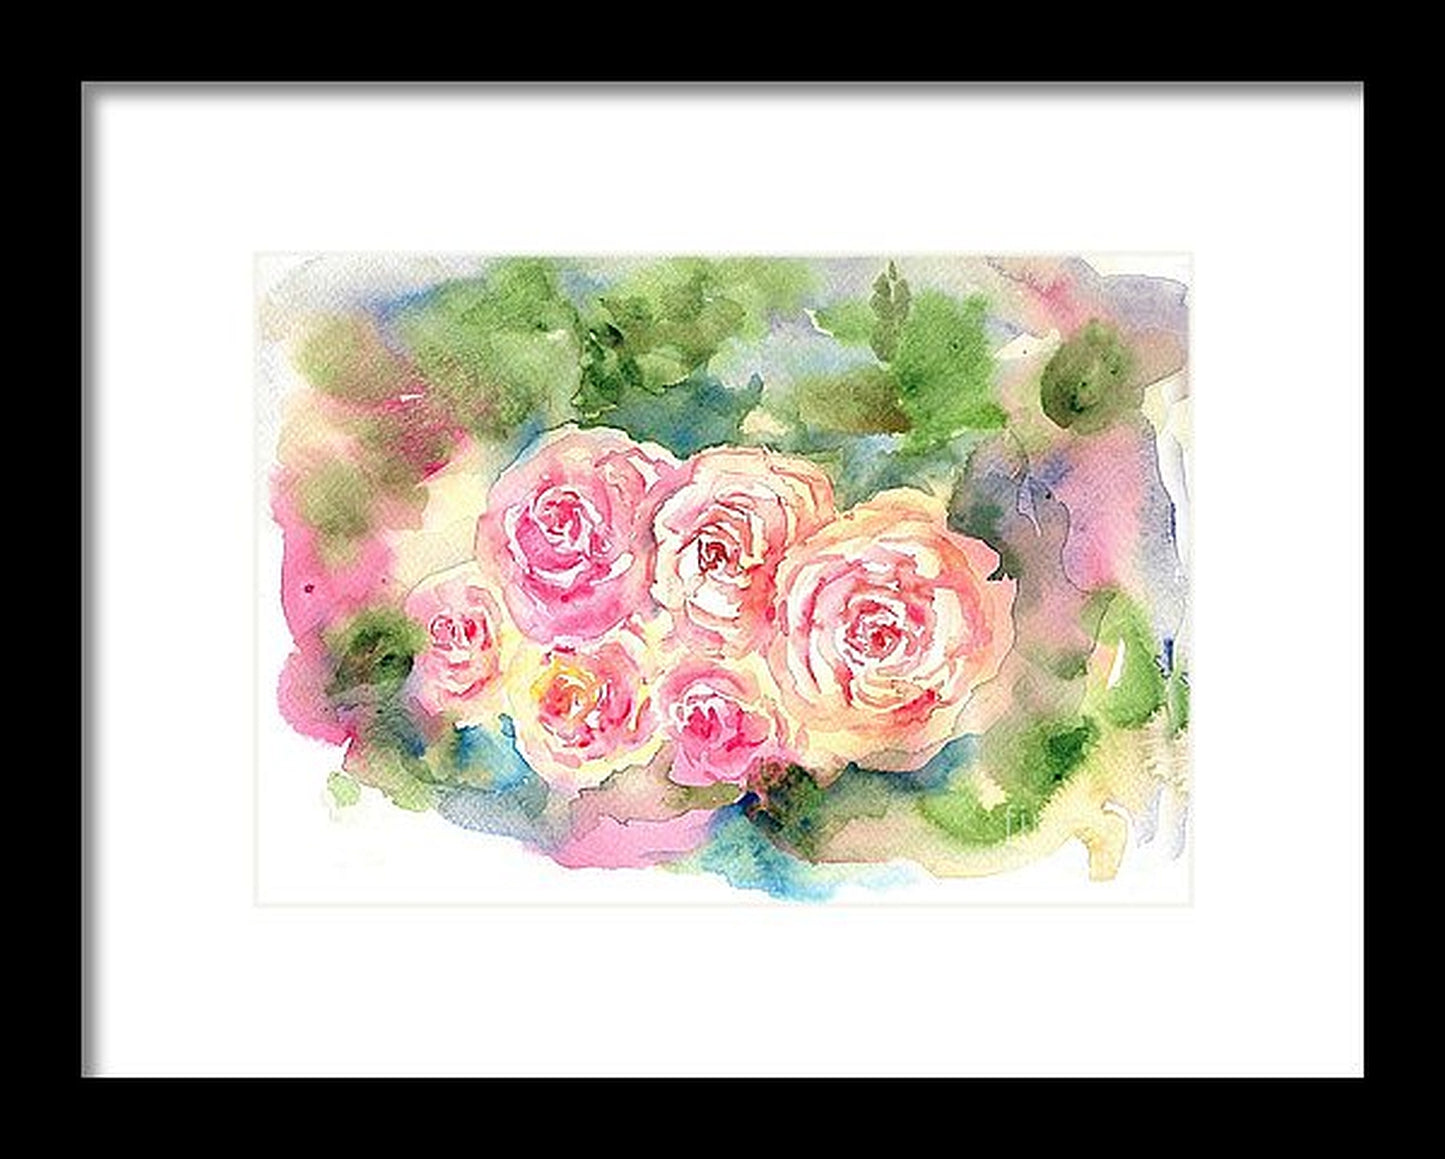 Virtual frame view Pink English Roses, watercolor painting